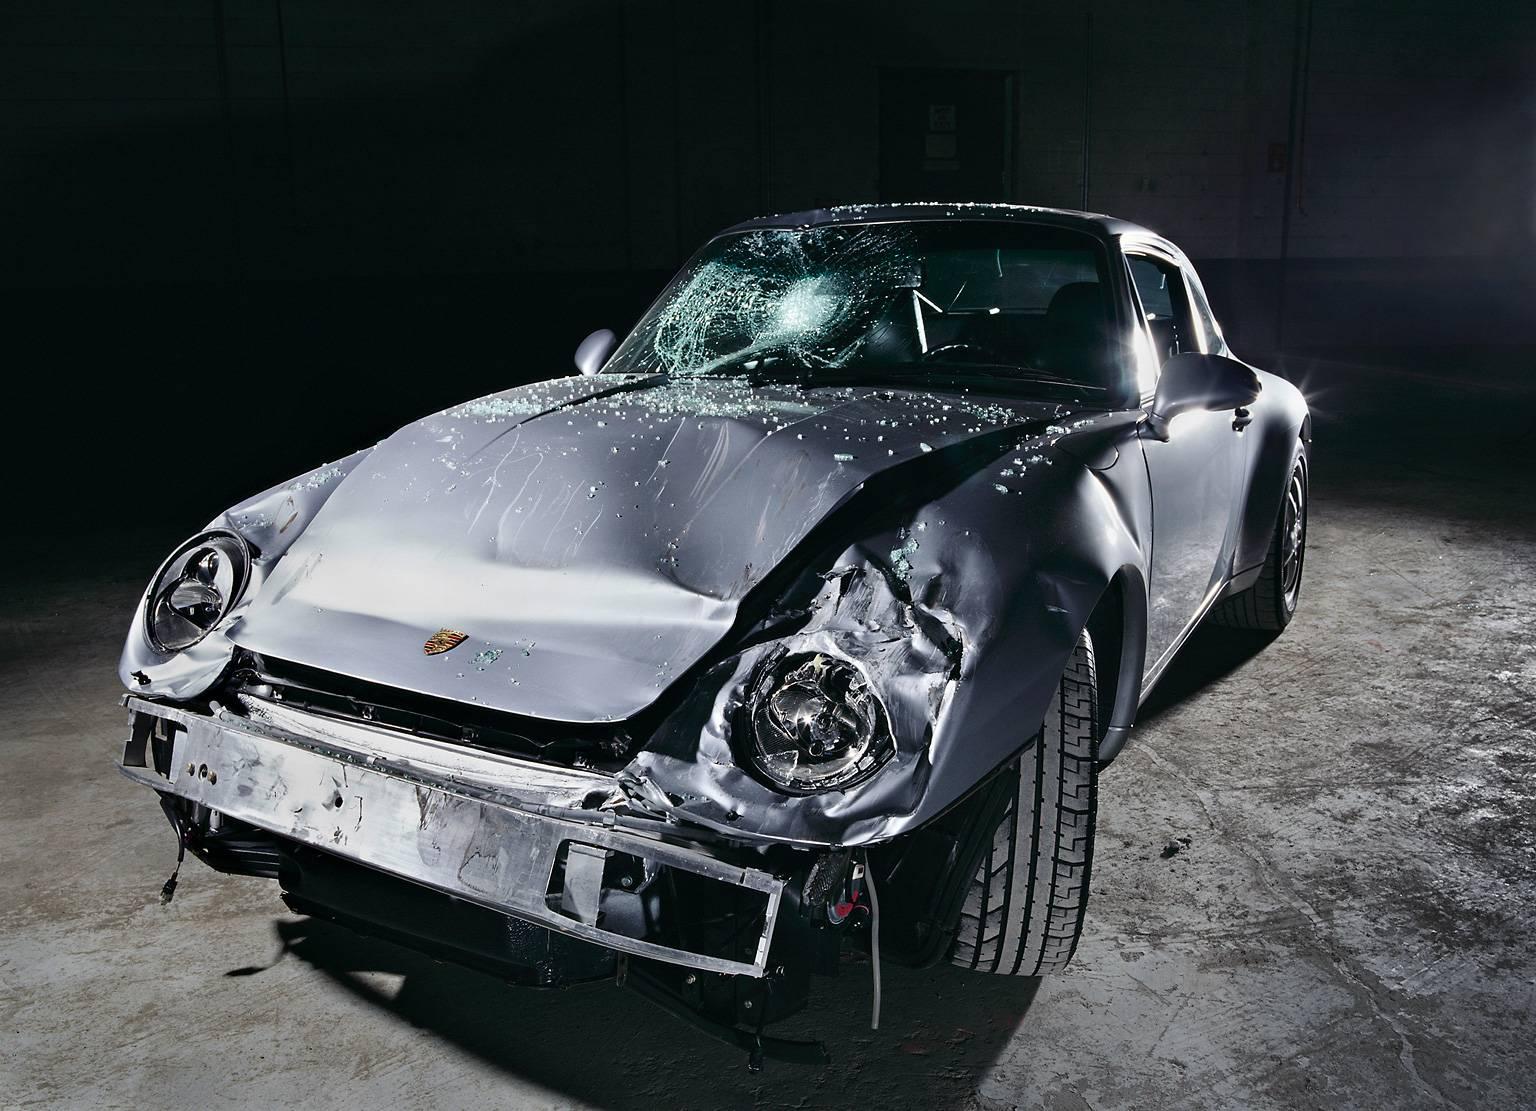 NINE-ONE-ONE (Porsche 911) - large scale studio photograph of crashed automobile